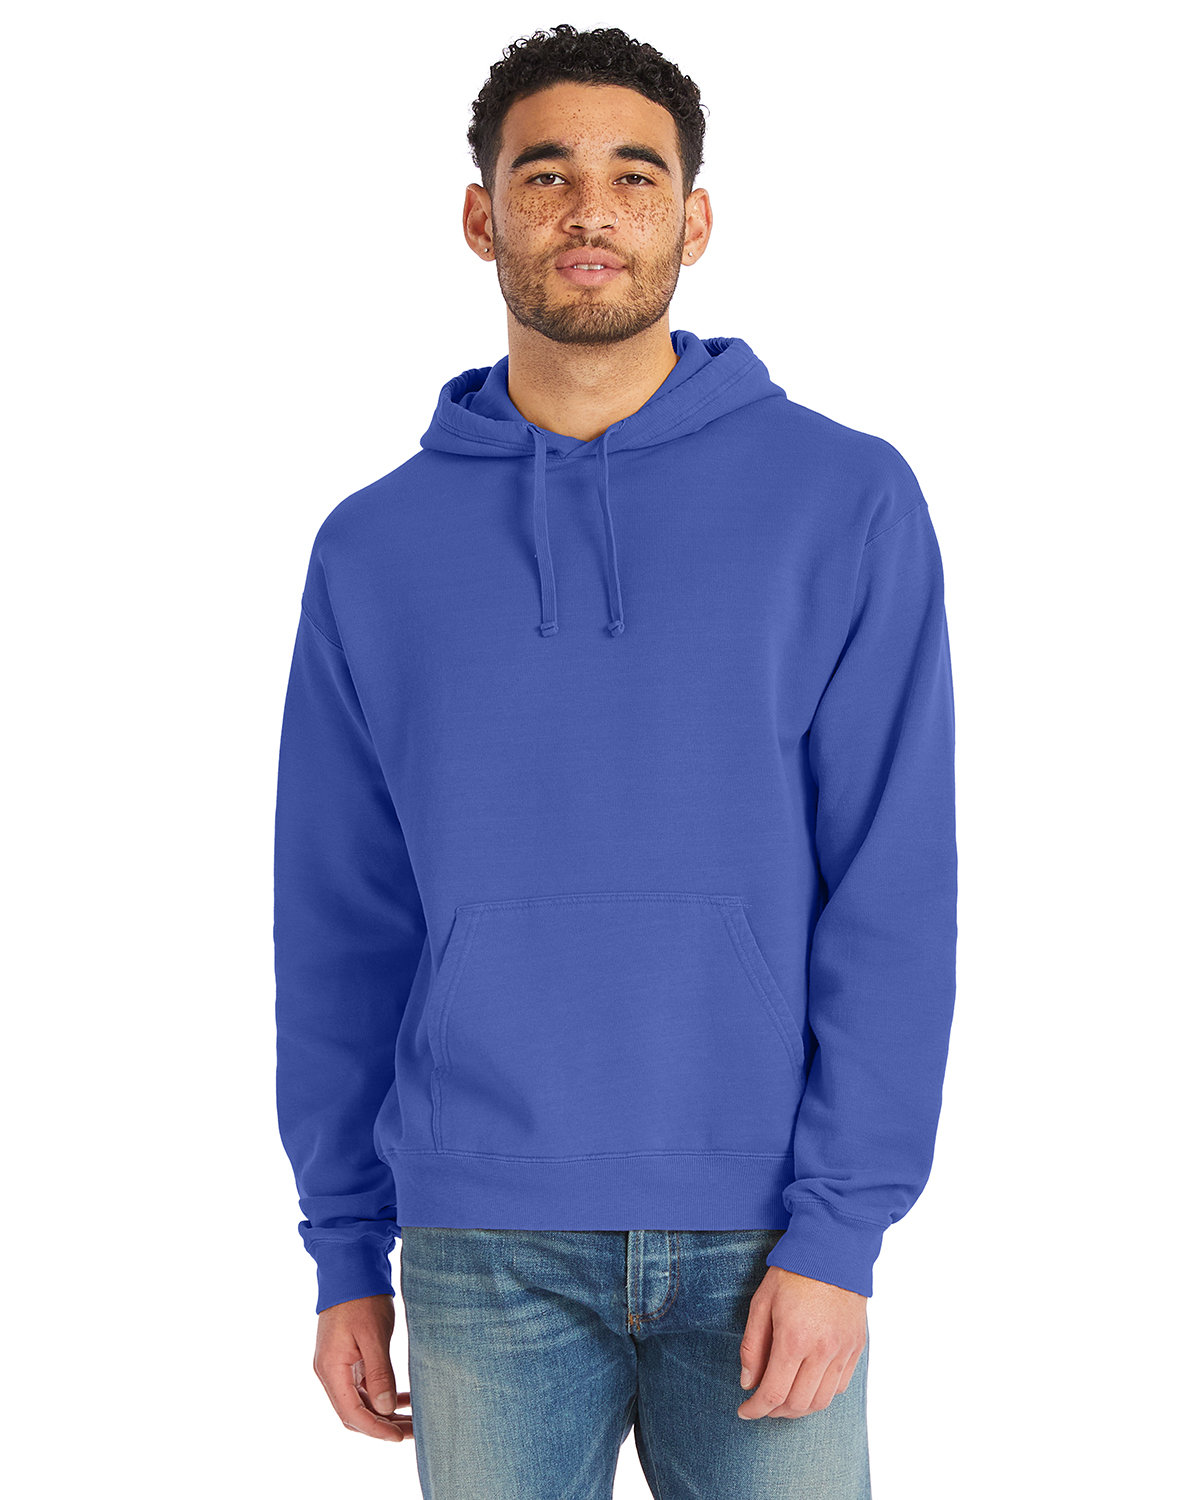 Unisex Pullover Hooded Sweatshirt-